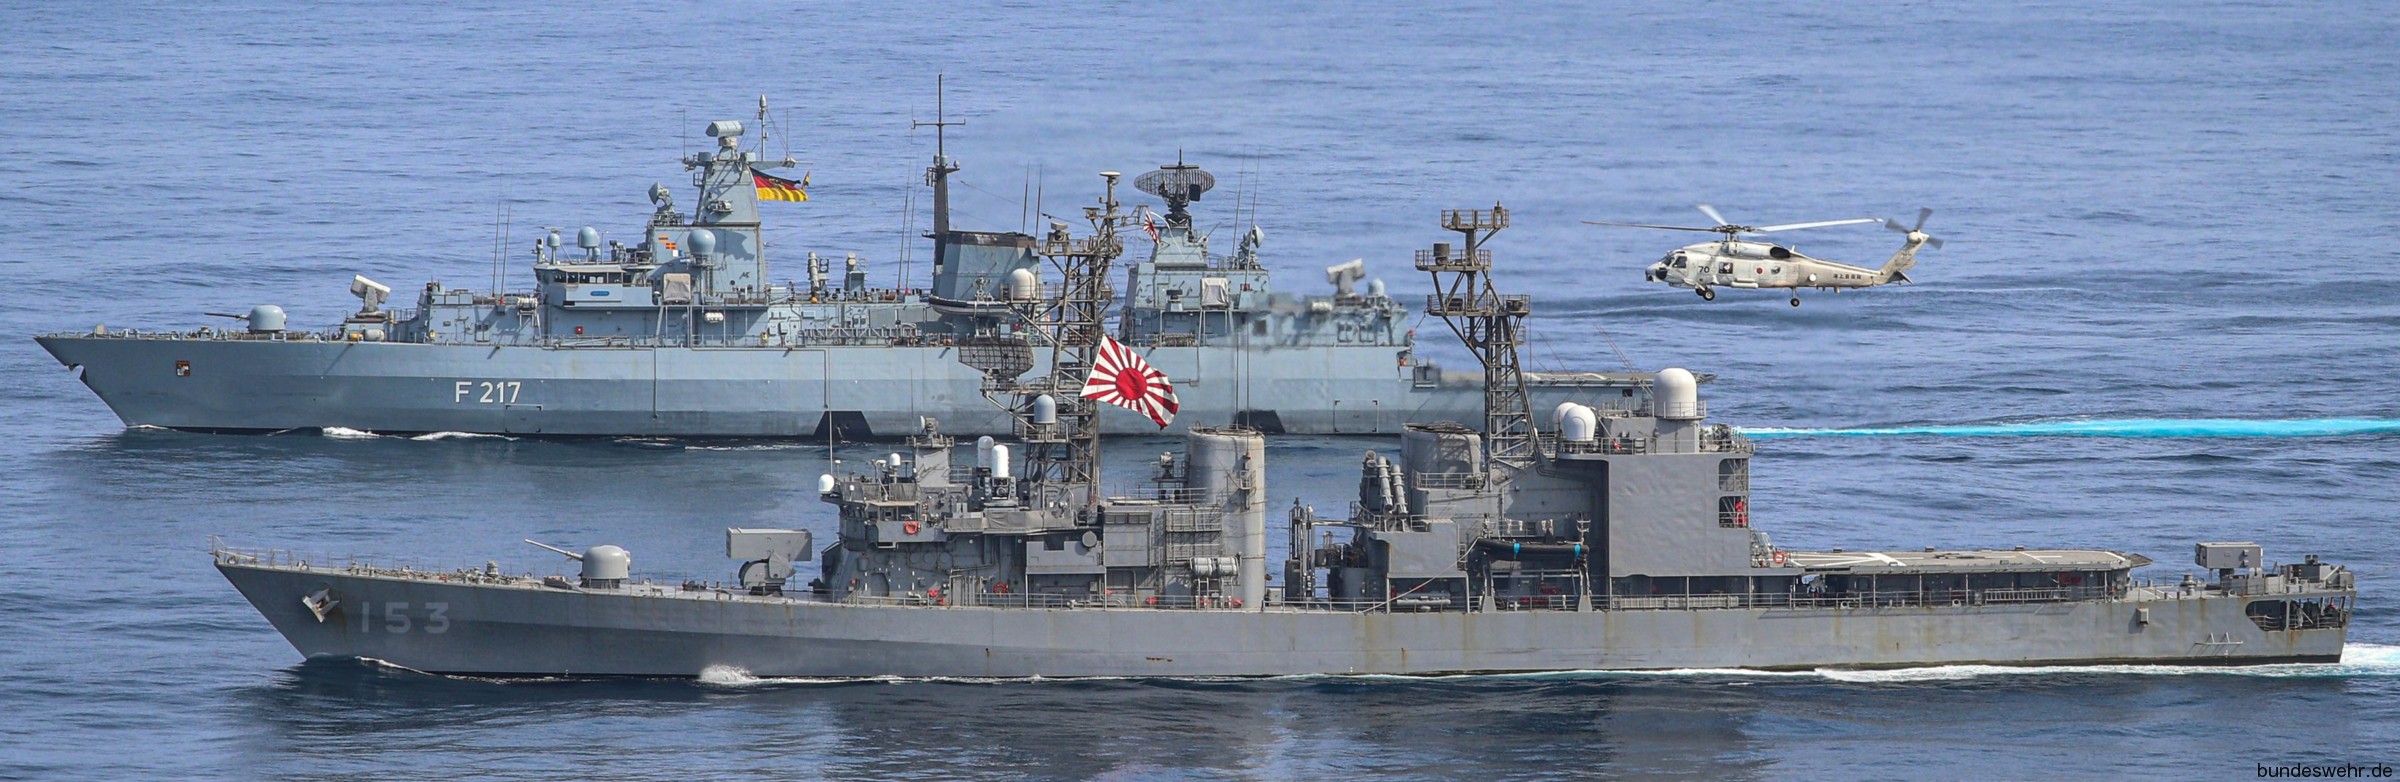 dd-153 js yugiri asagiri class destroyer japan maritime self defense force jmsdf 15